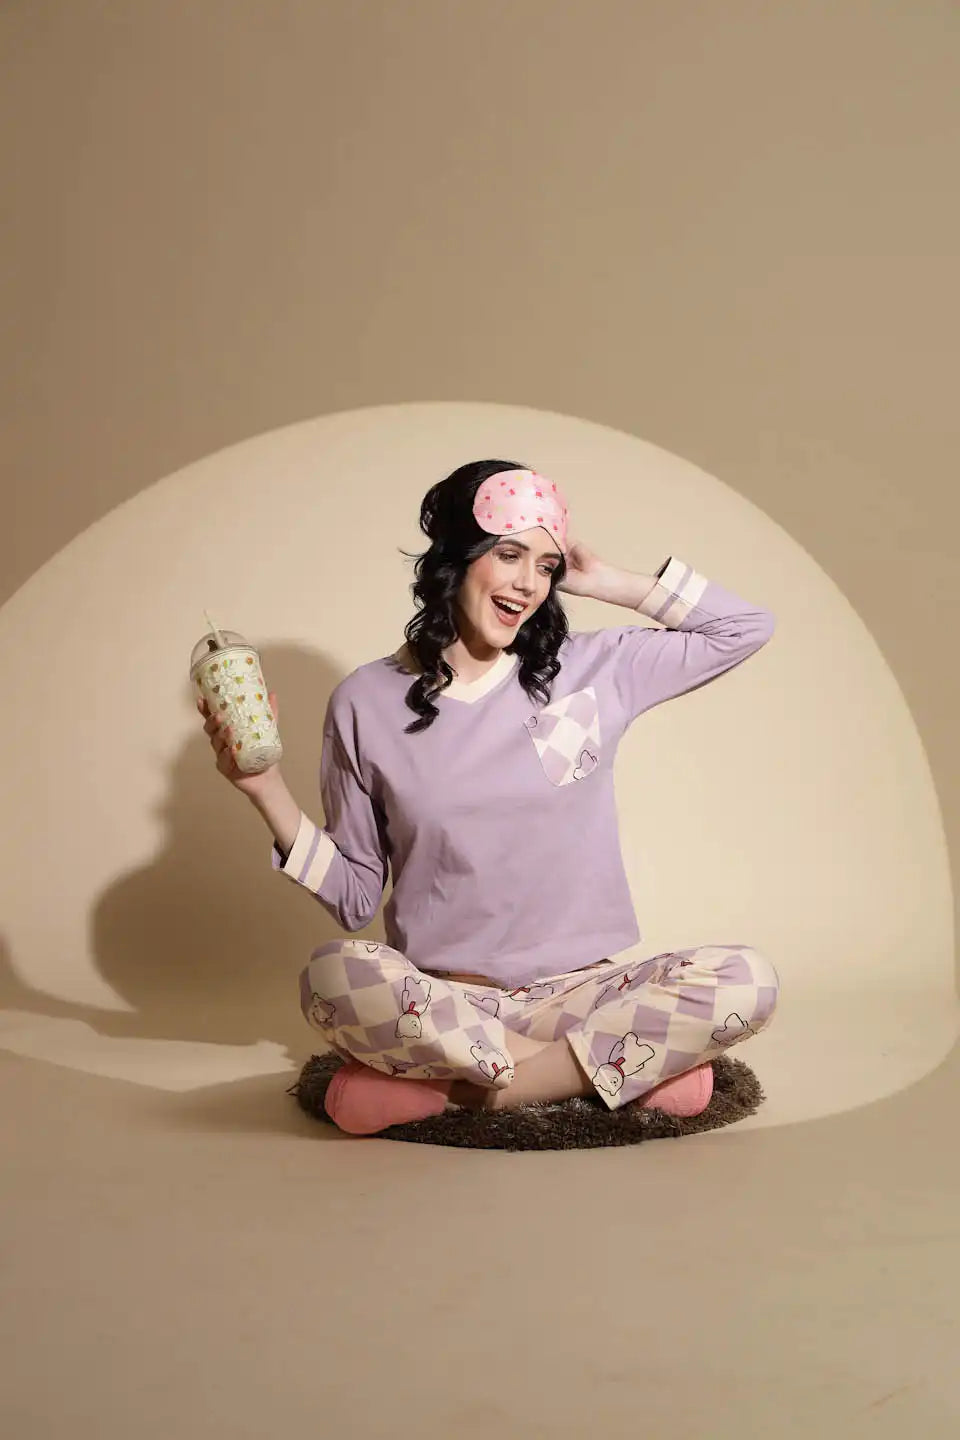 Lavender Hosiery Solid Top & Pyjama Night Suit Set